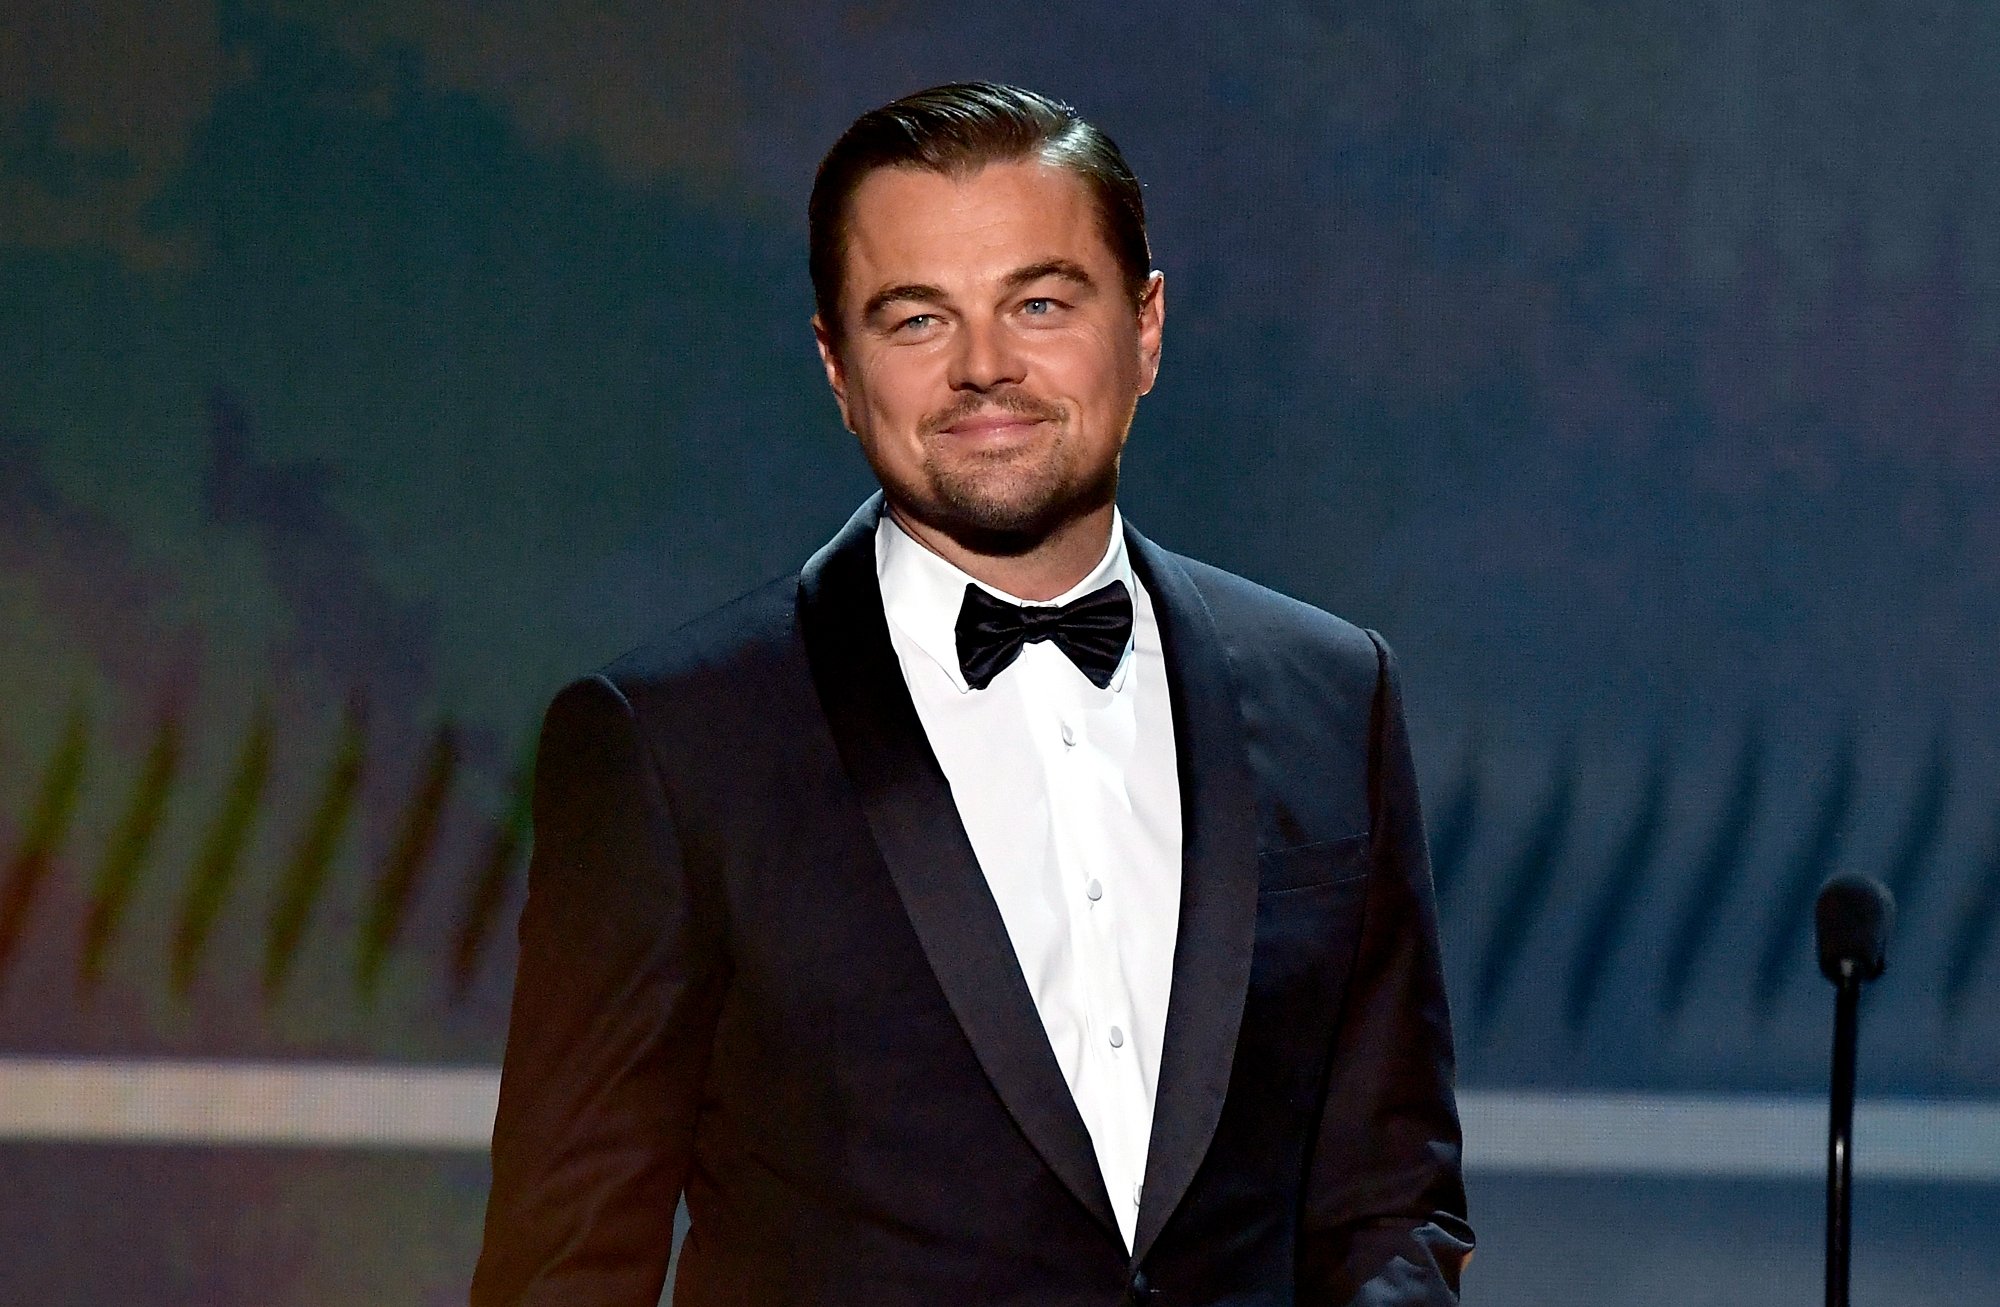 'Don't Look Up' star Leonardo DiCaprio wearing a tuxedo